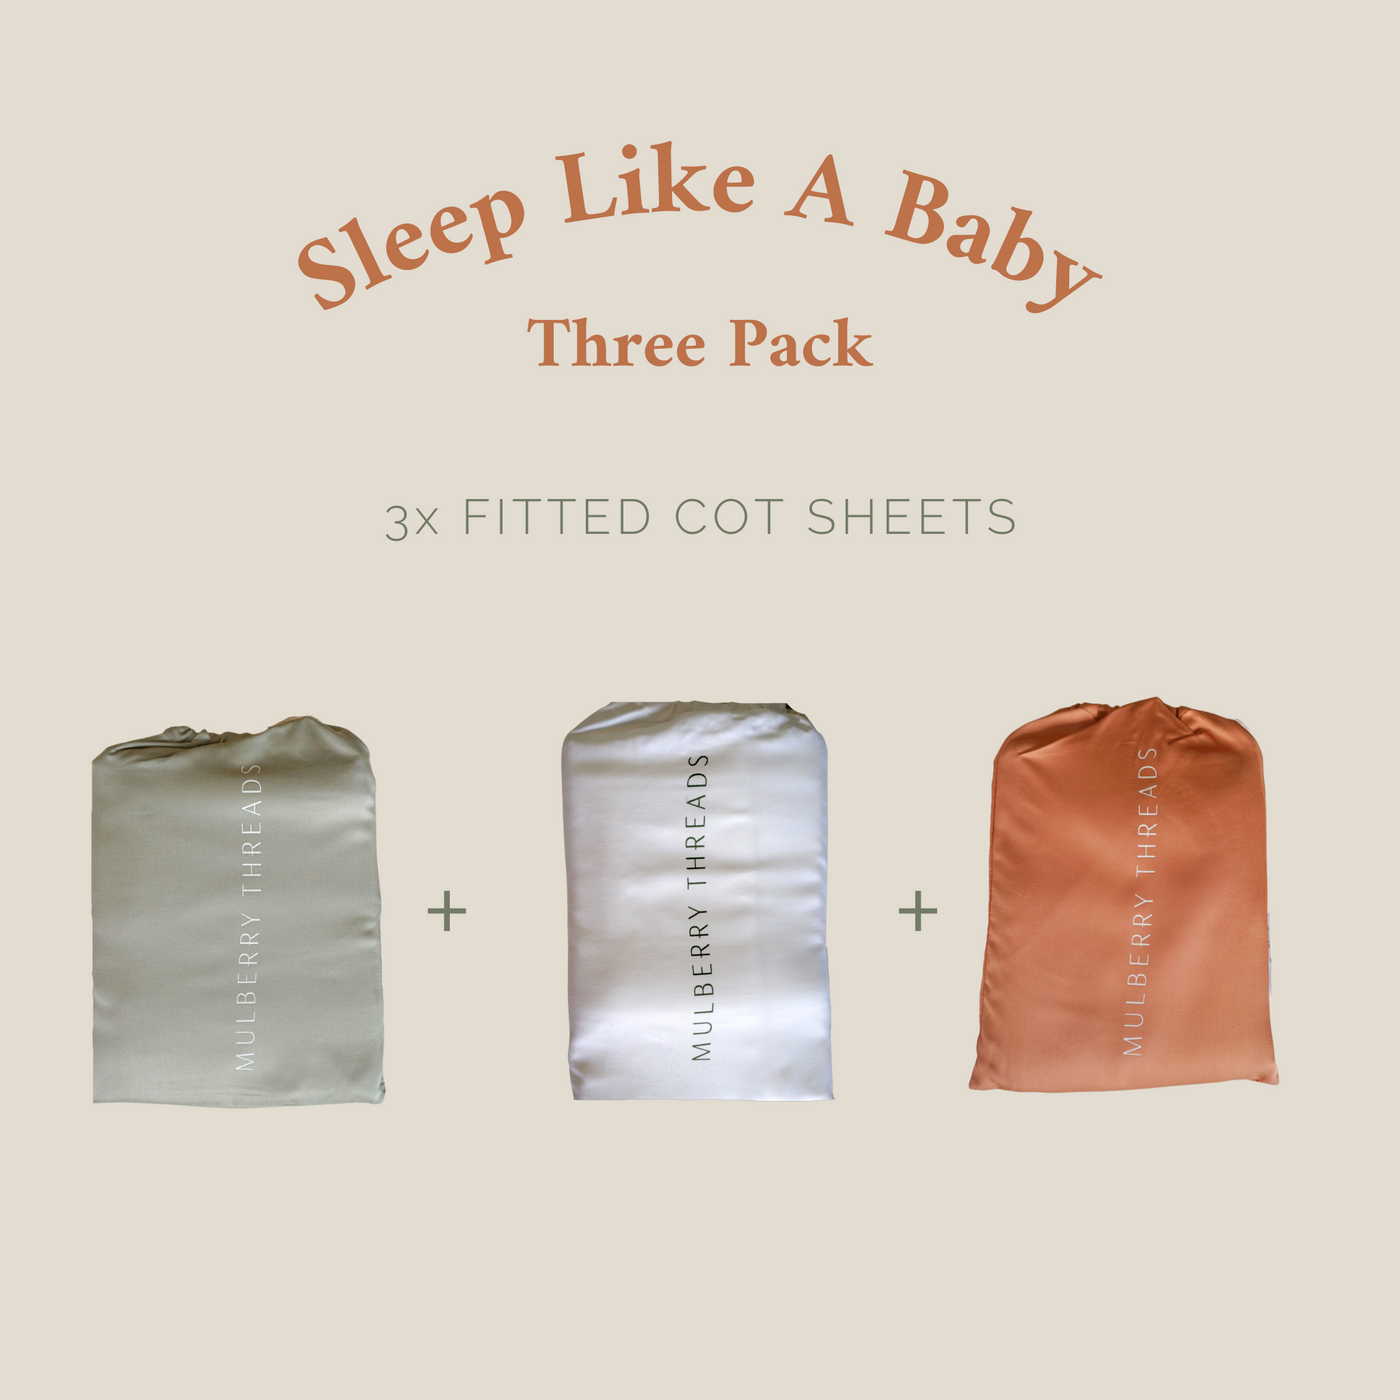 Sleep Like a Baby - Three